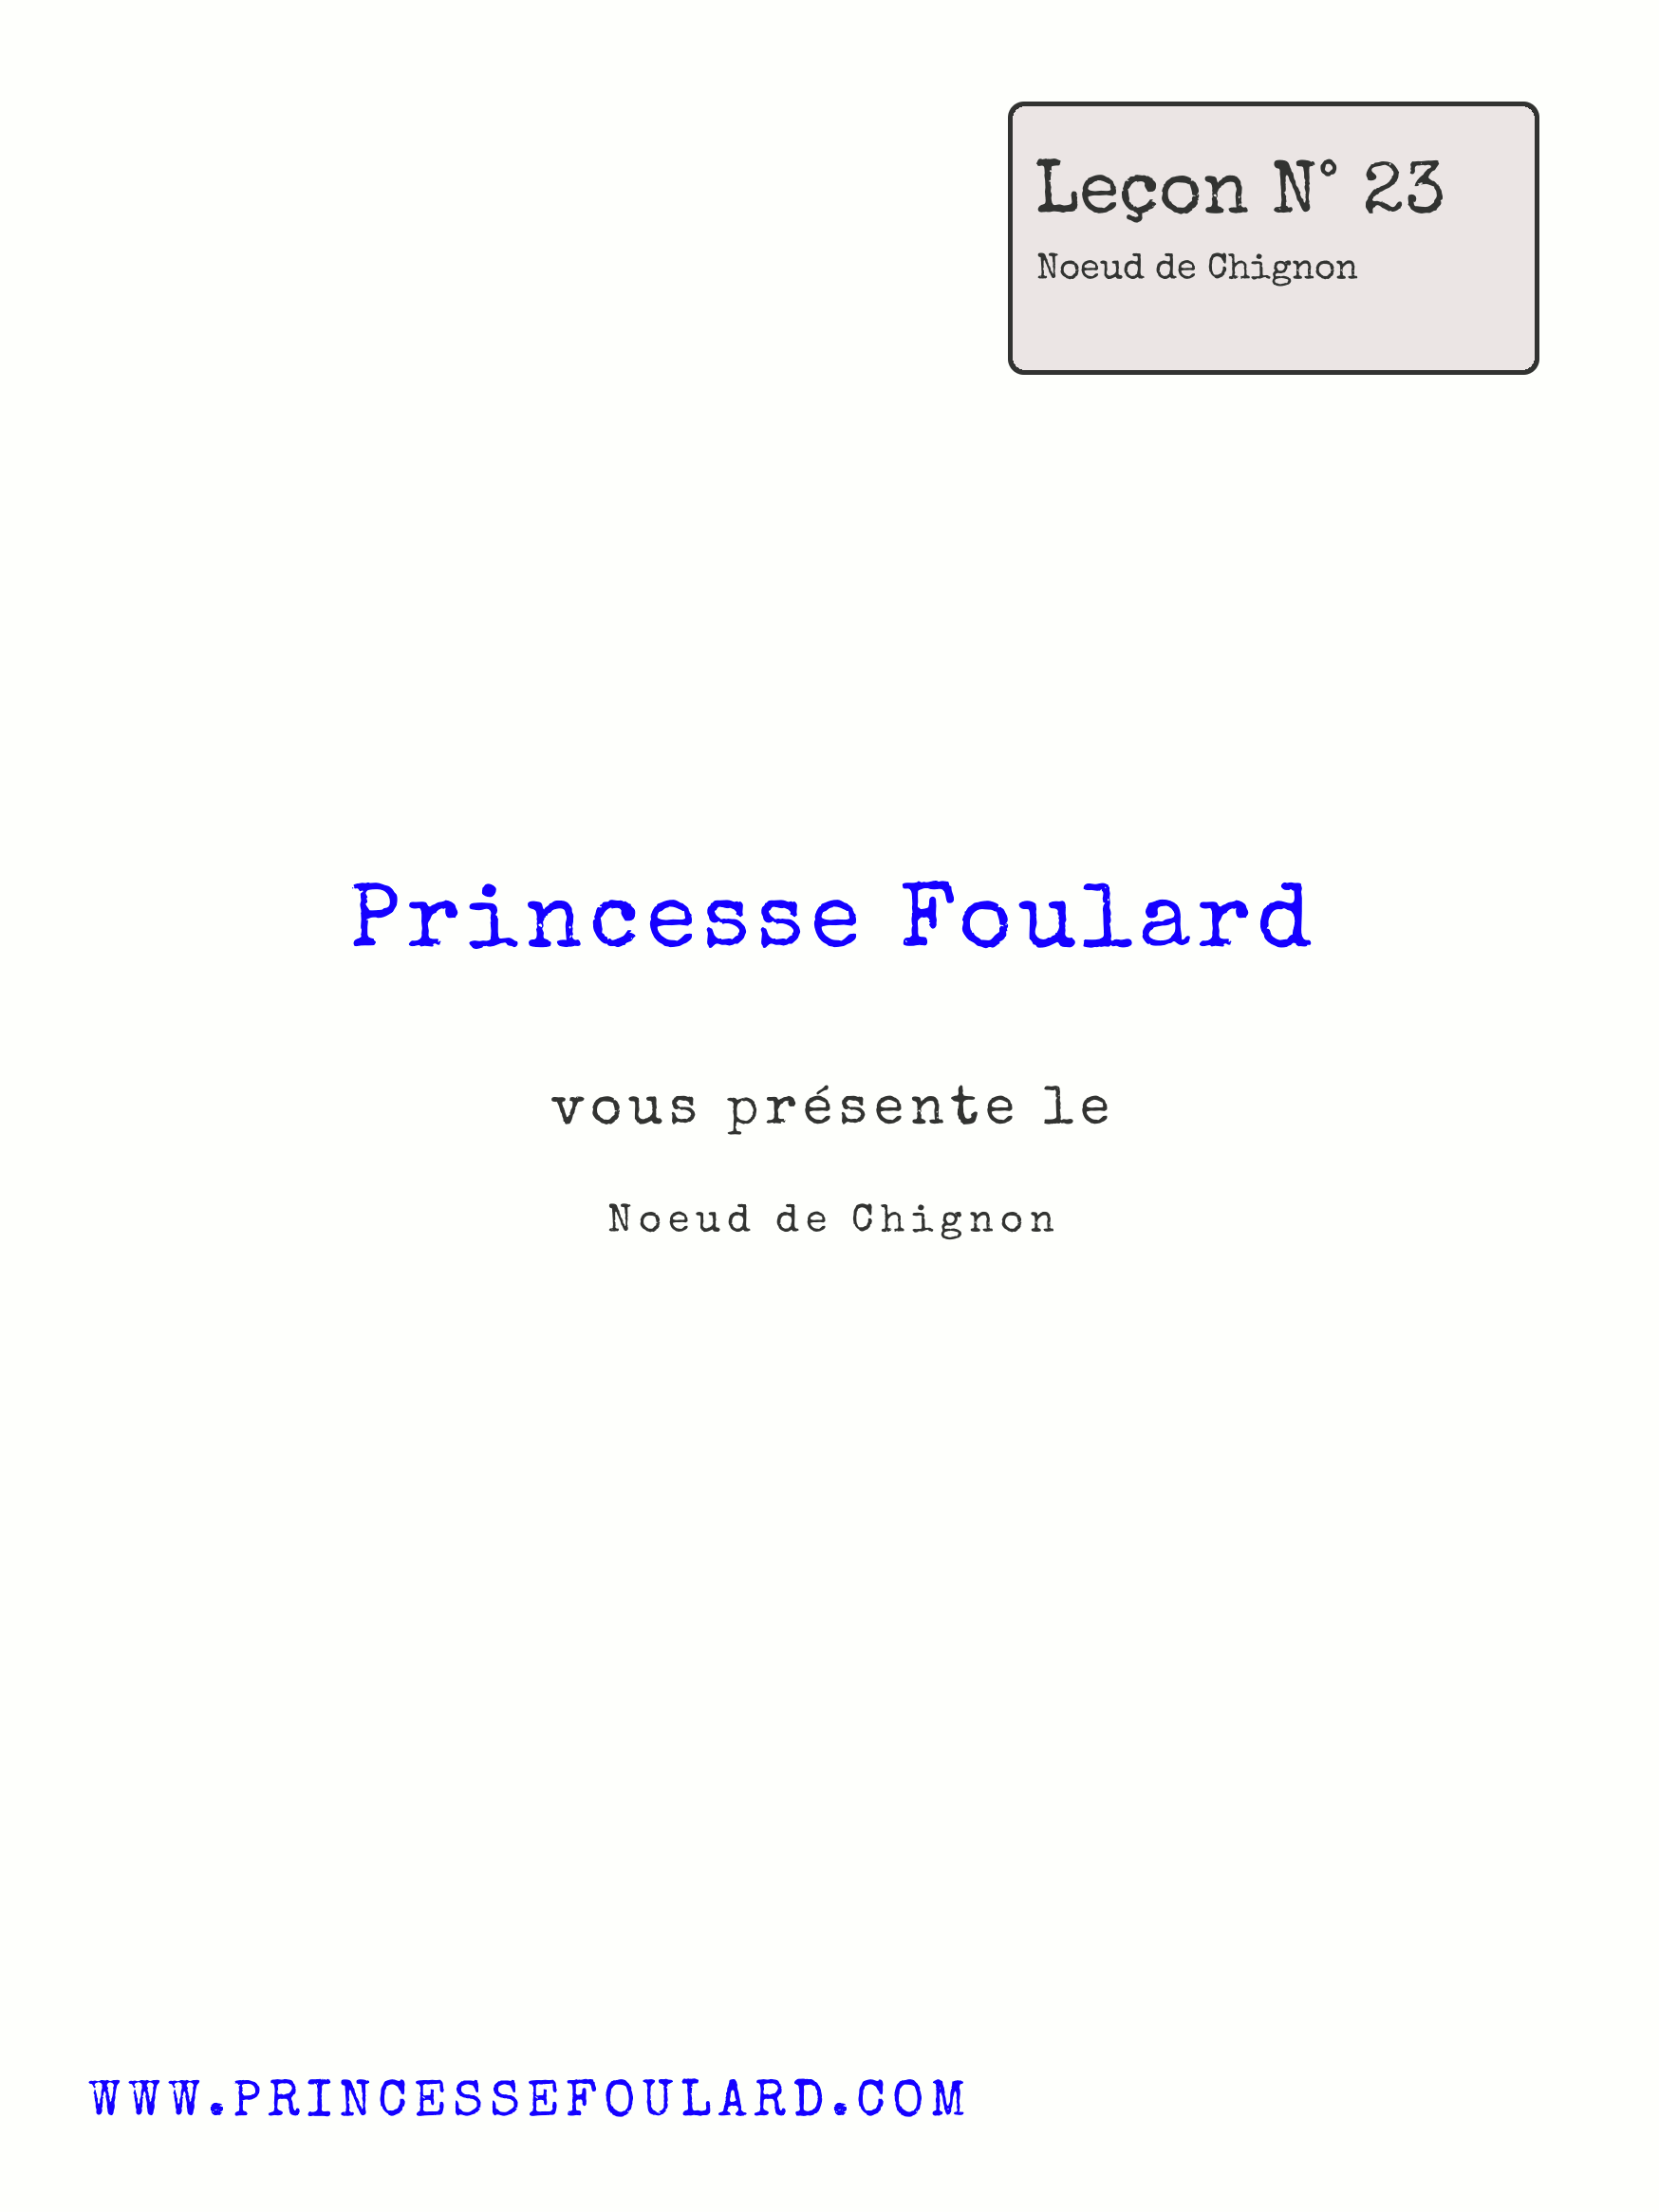 Tuto Noeud de Foulard chignon par "Princesse Foulard"